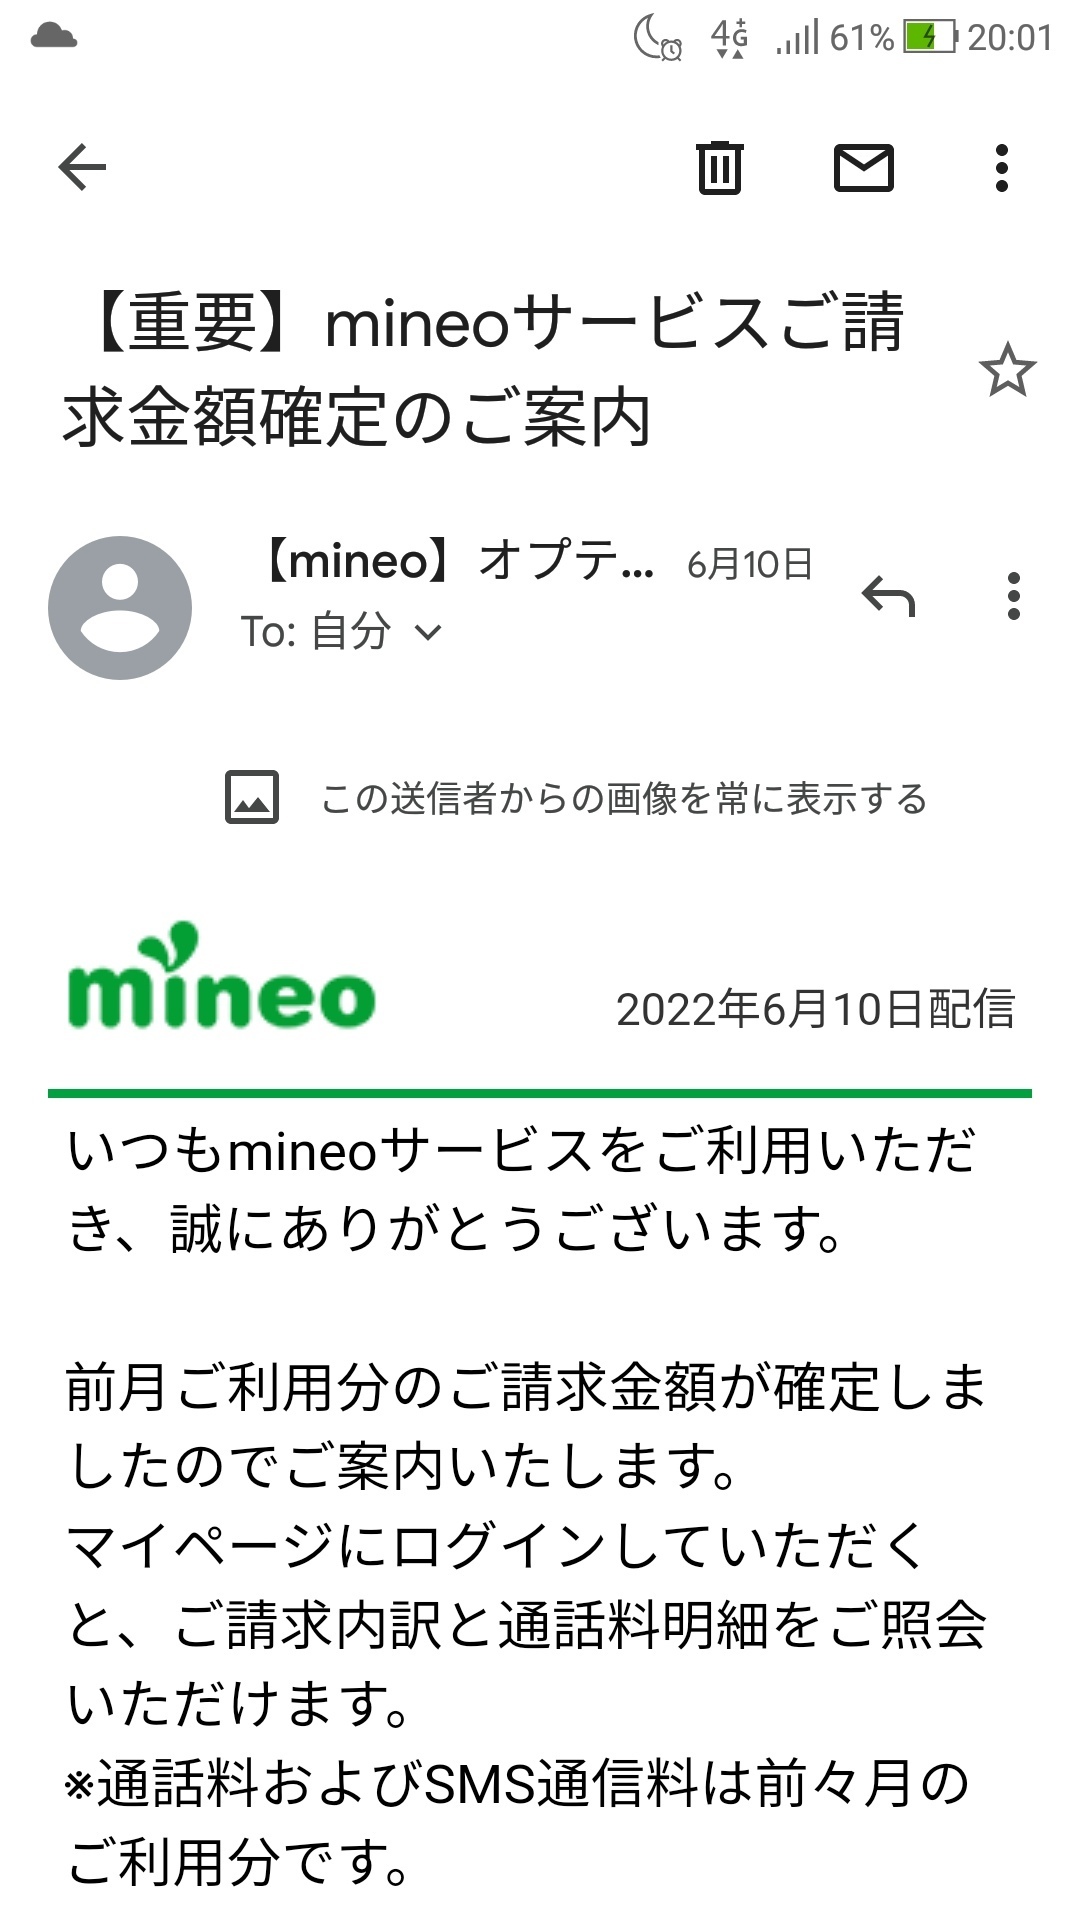 mineo_mail_new3.jpg